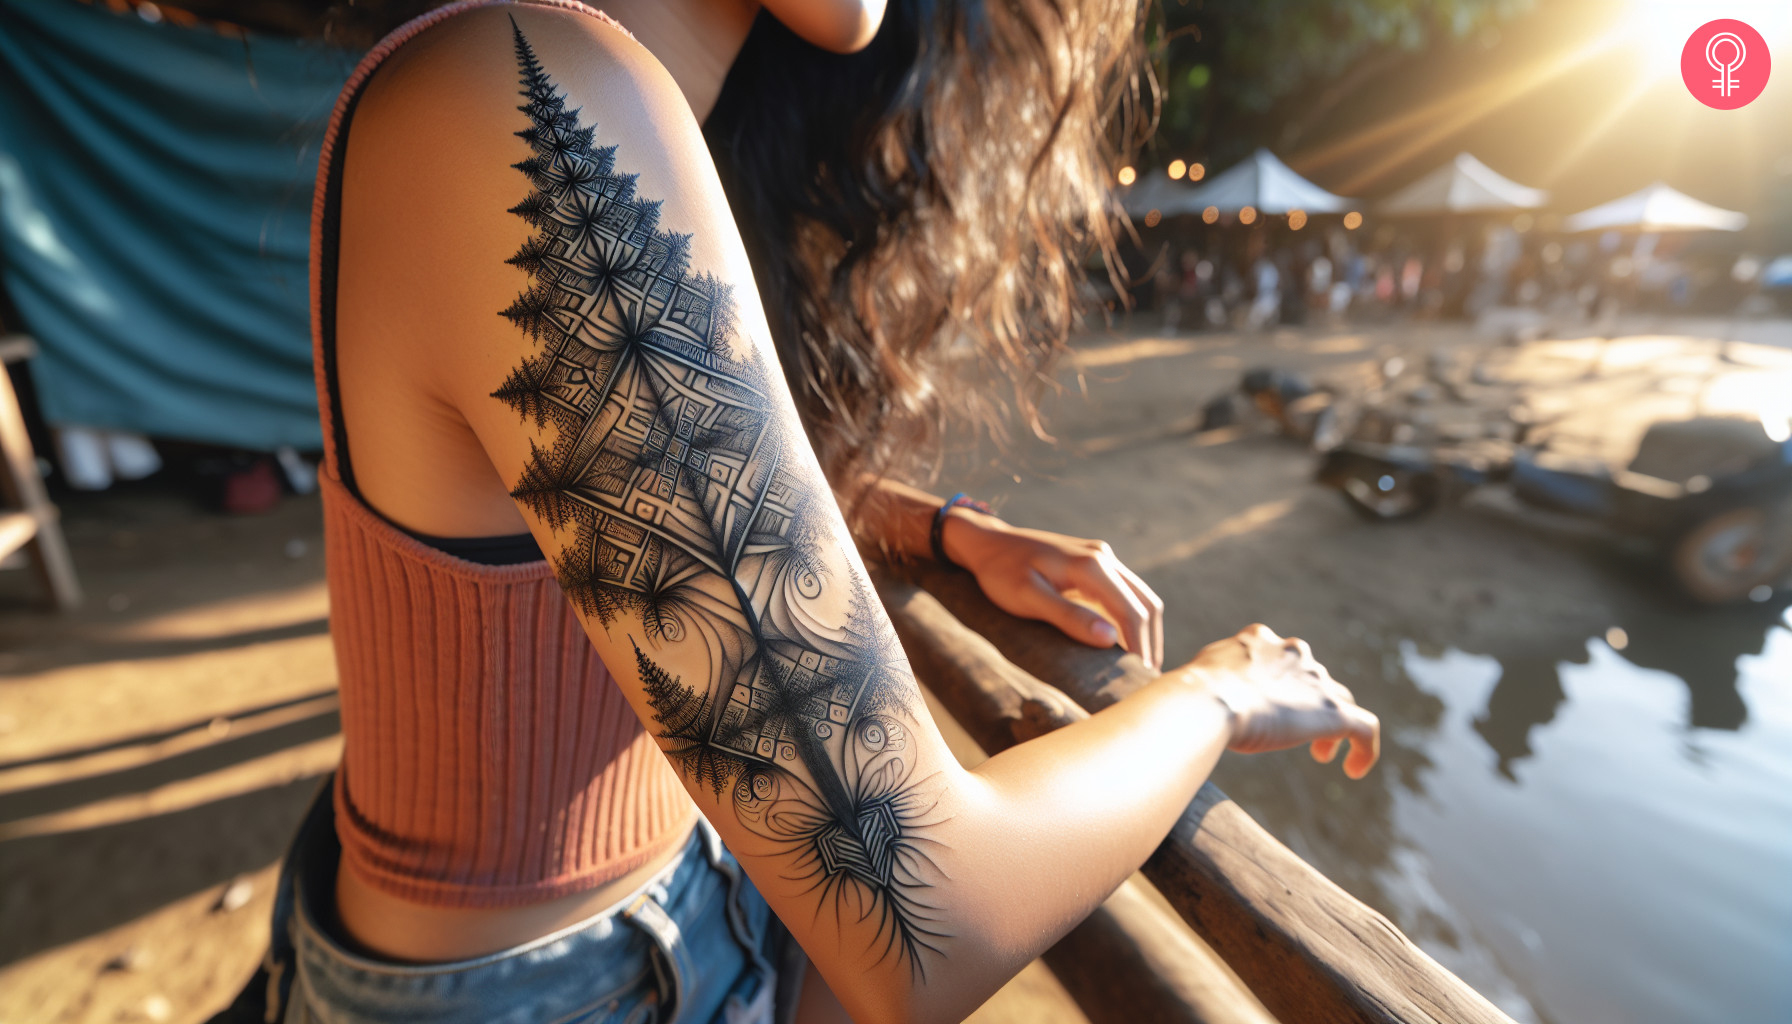 Fractal tree tattoo on a woman’s arm